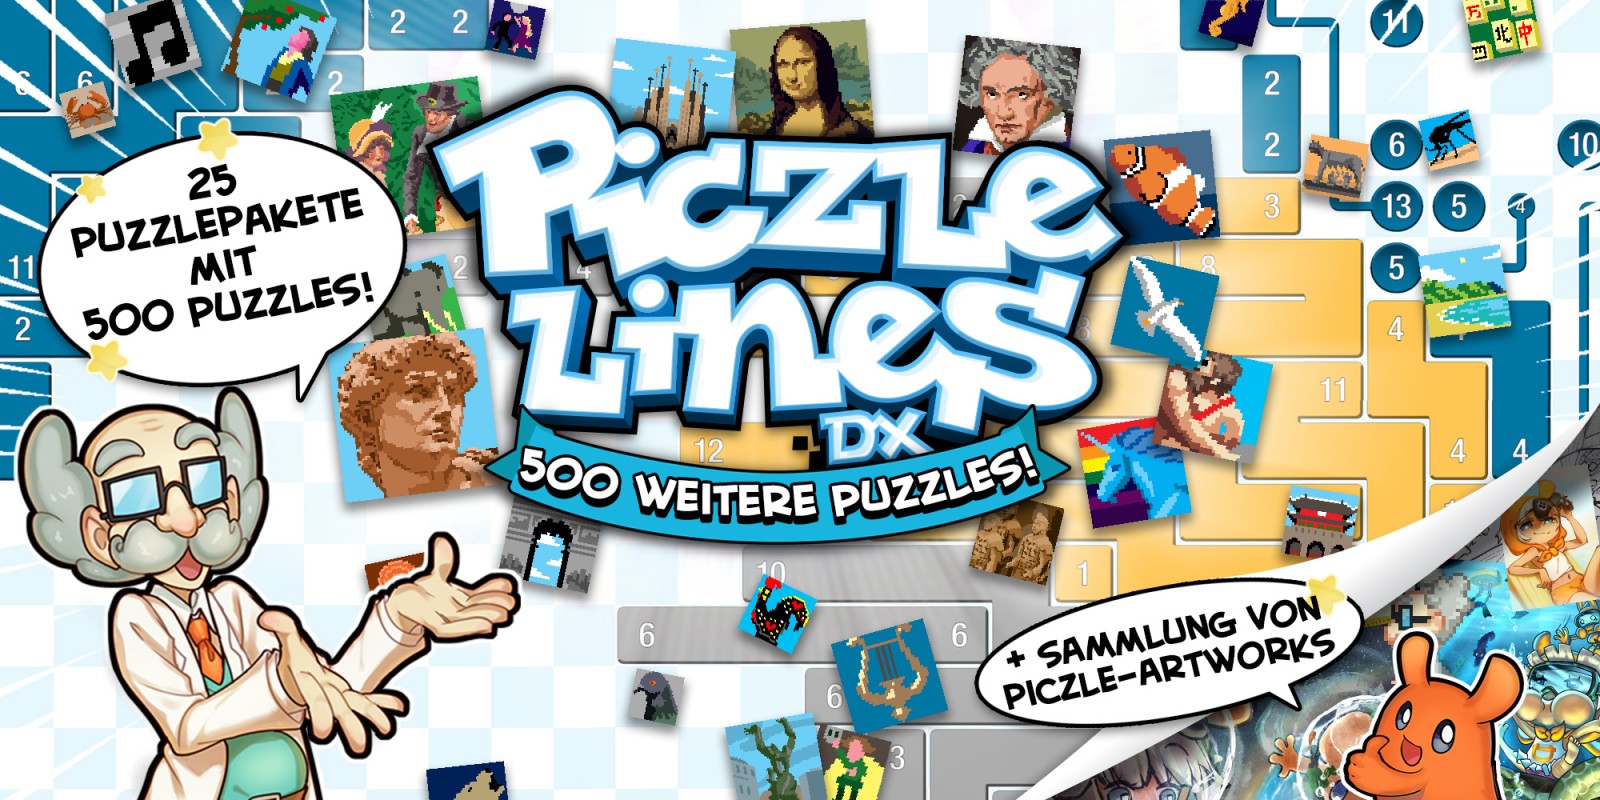 Piczle Lines DX 500 weitere Puzzles!